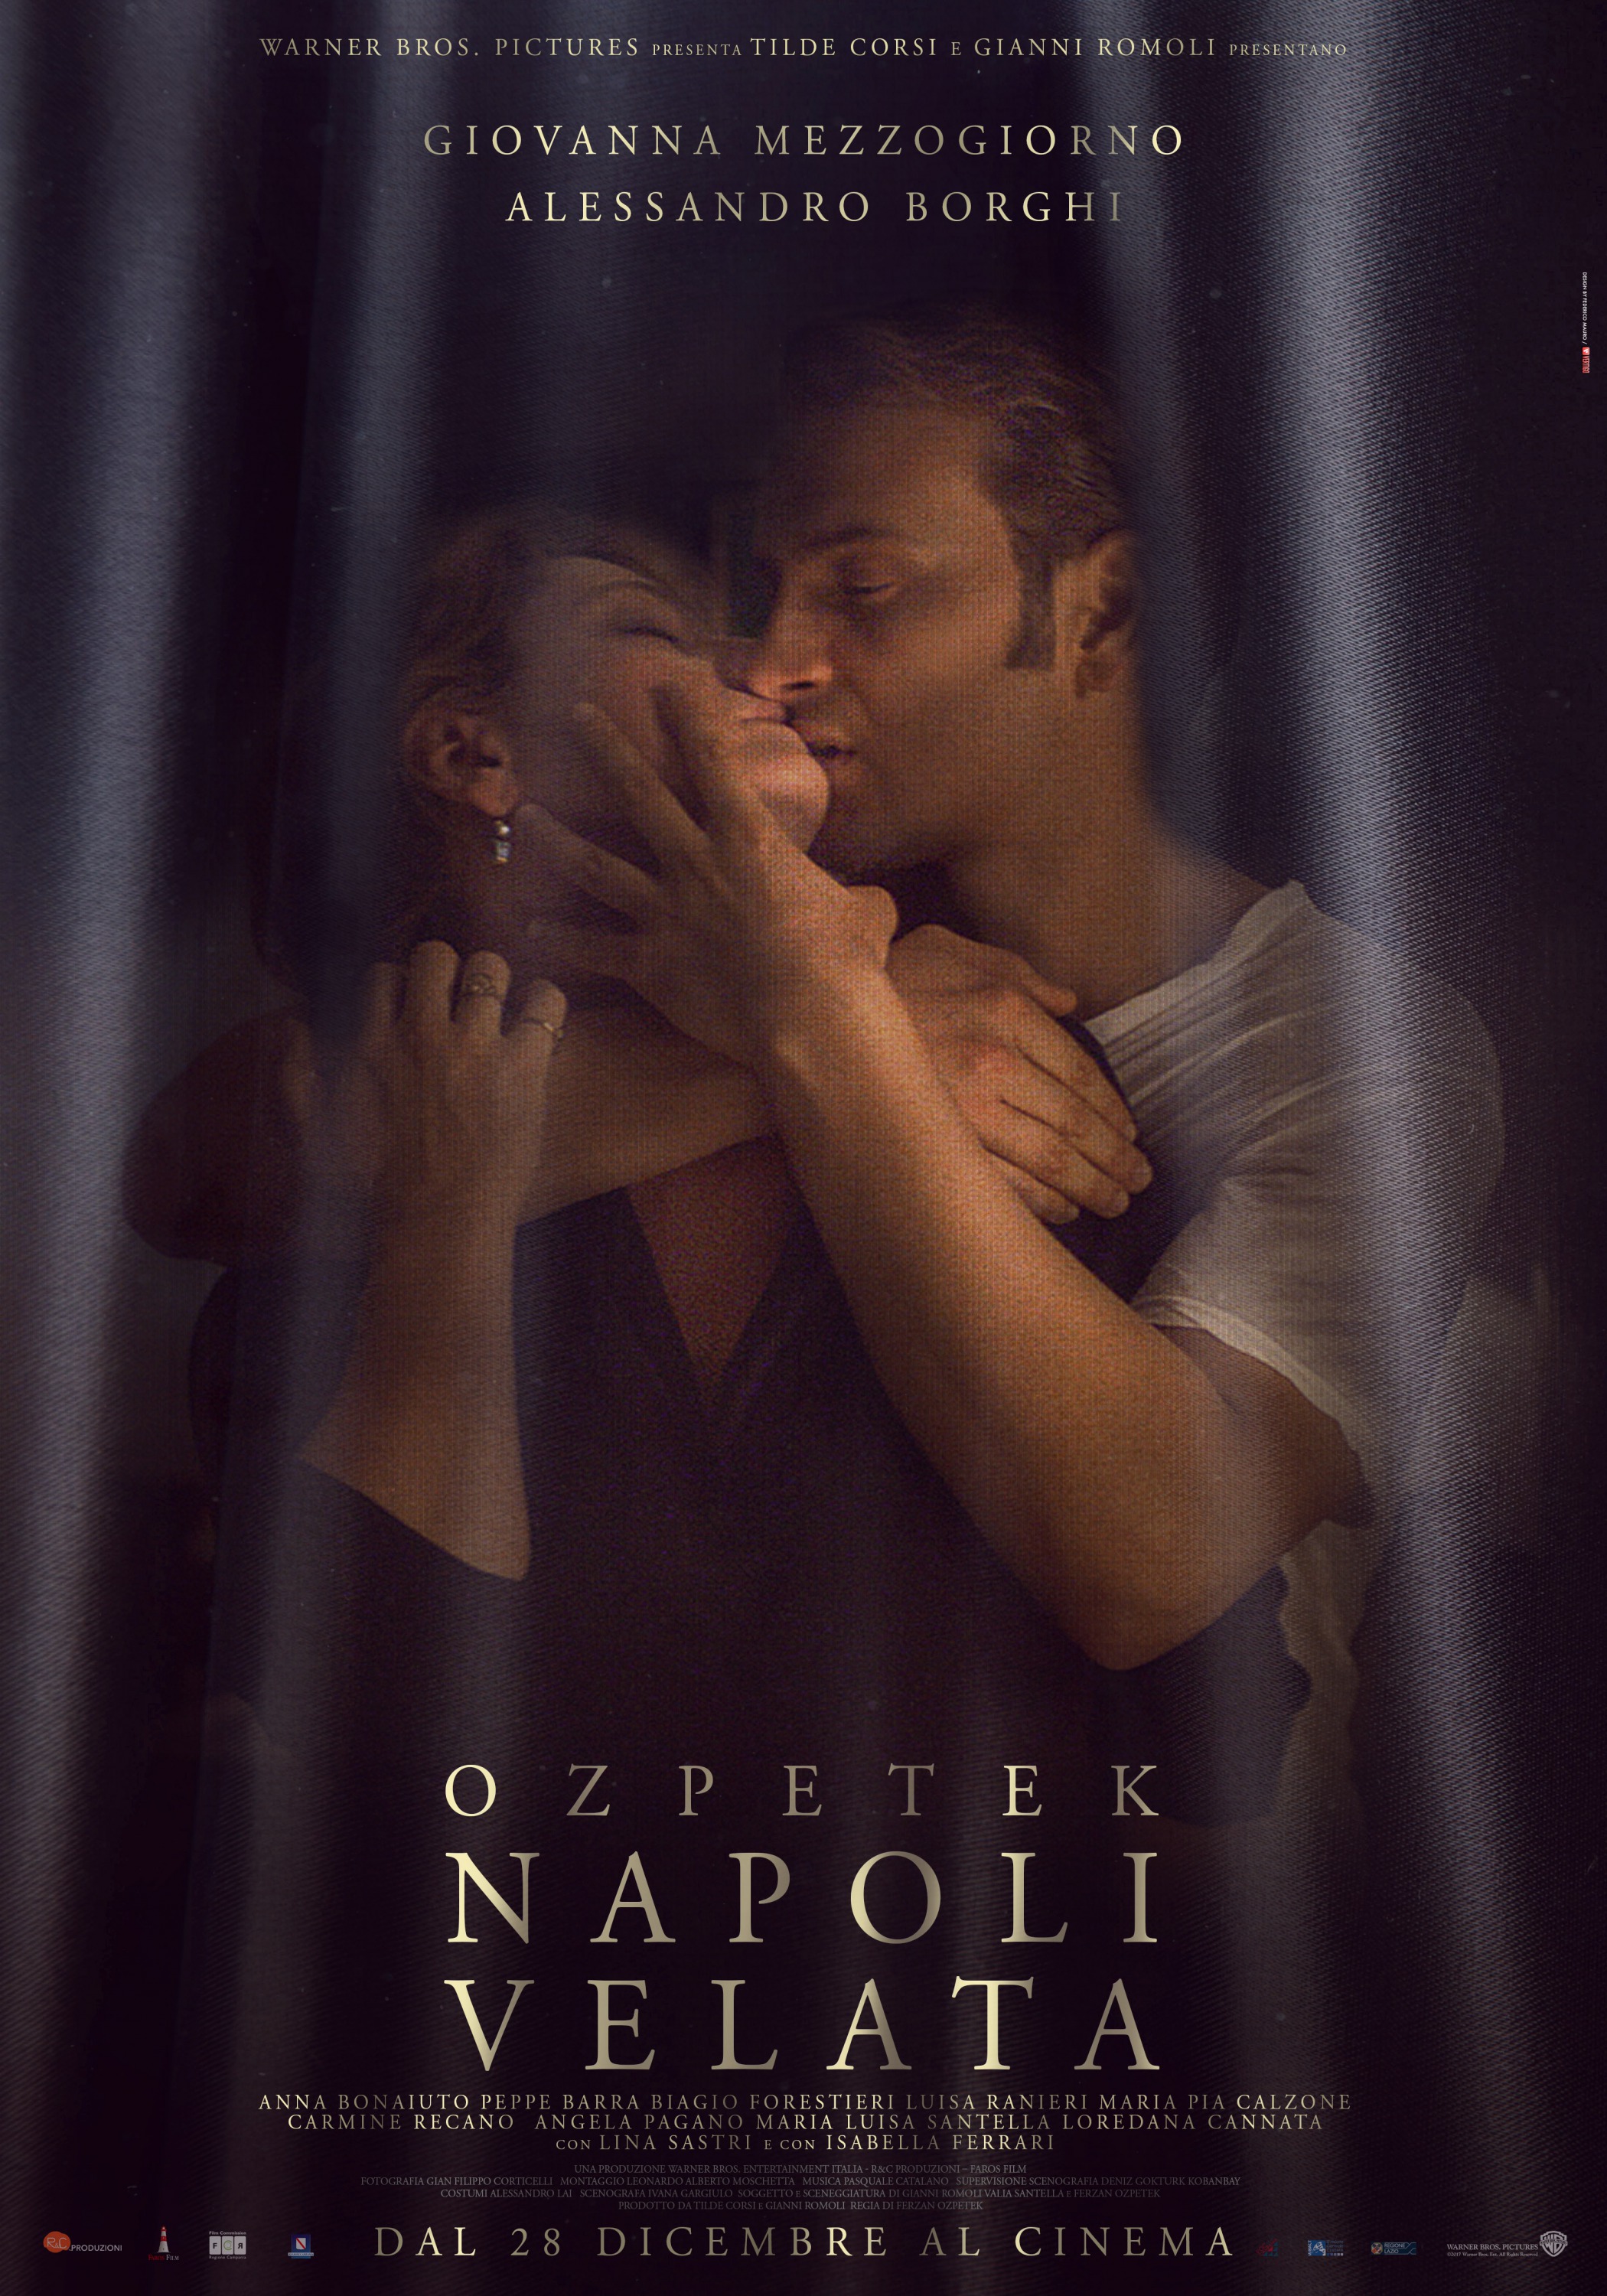 Mega Sized Movie Poster Image for Napoli velata (#2 of 4)